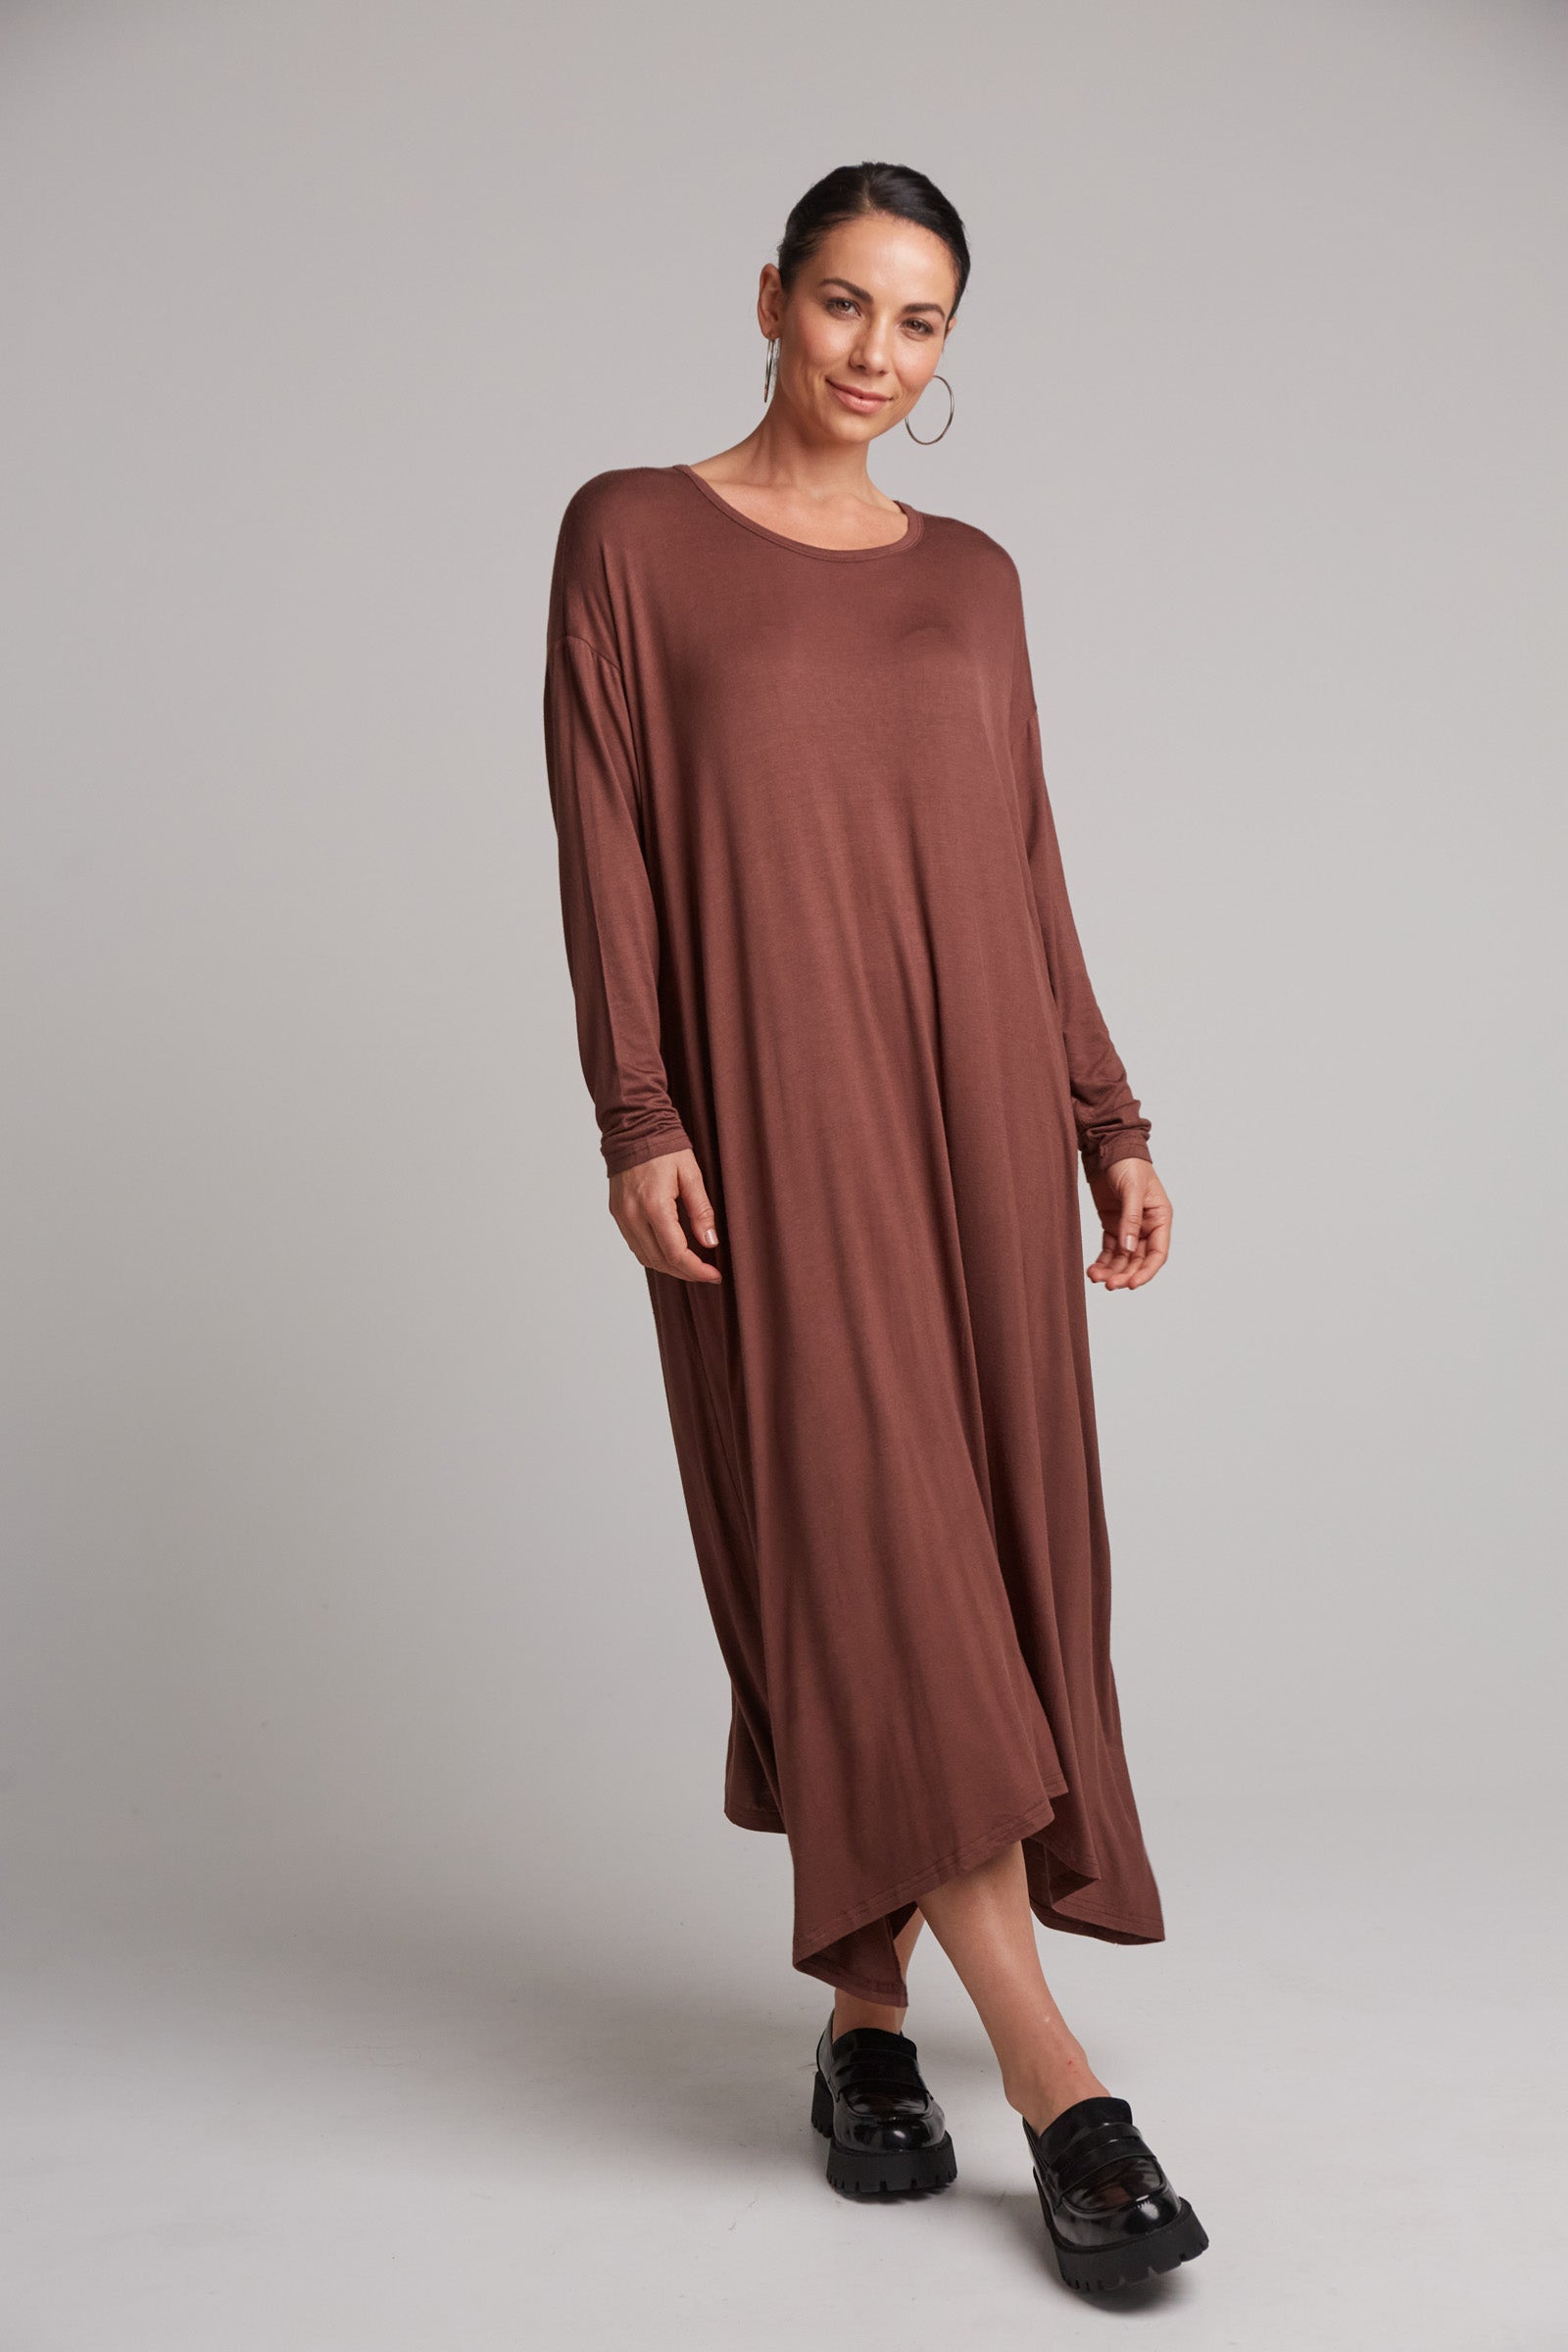 Studio Jersey Dress - Mocha - eb&ive Clothing - Dress Maxi